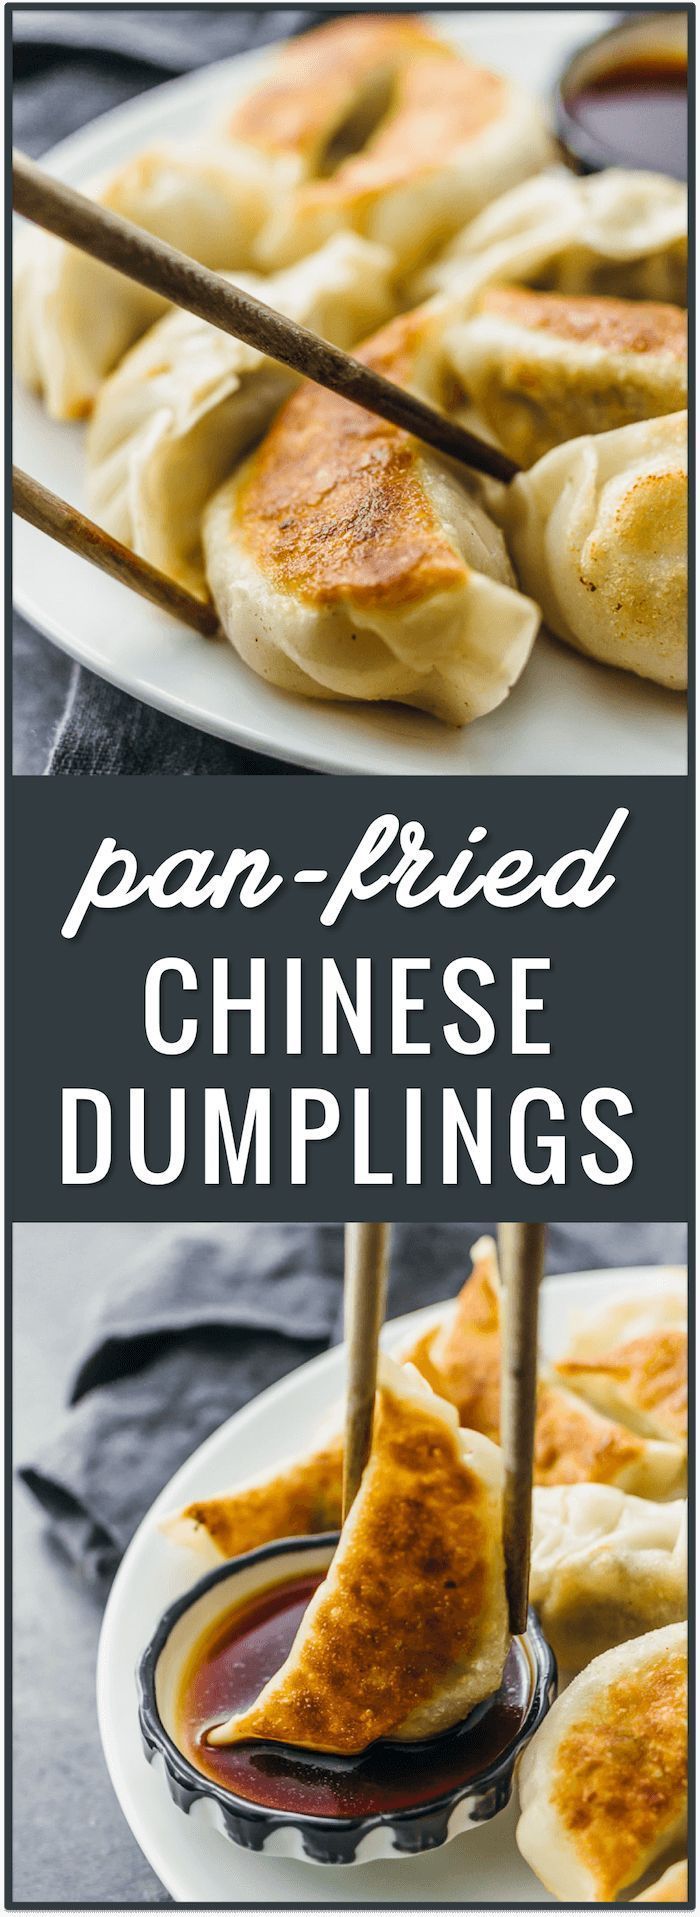 Pan-fried Chinese dumplings recipe, potstickers, pork dumplings, easy dumplings, how to cook dumplings from scratch, beef